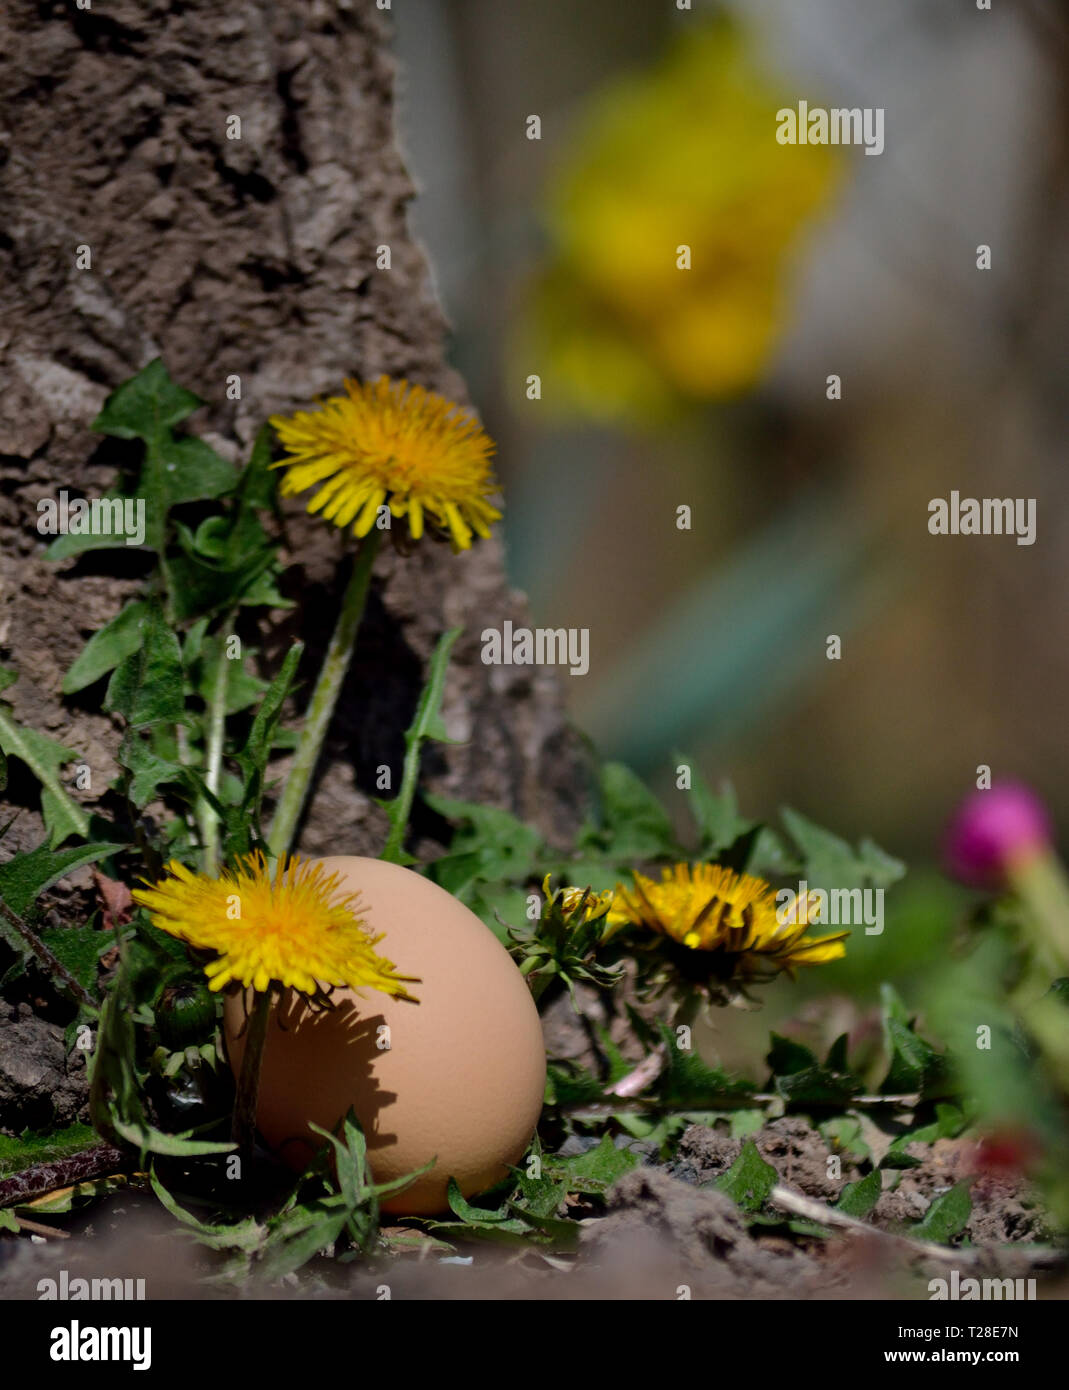 One egg in the garden Stock Photo